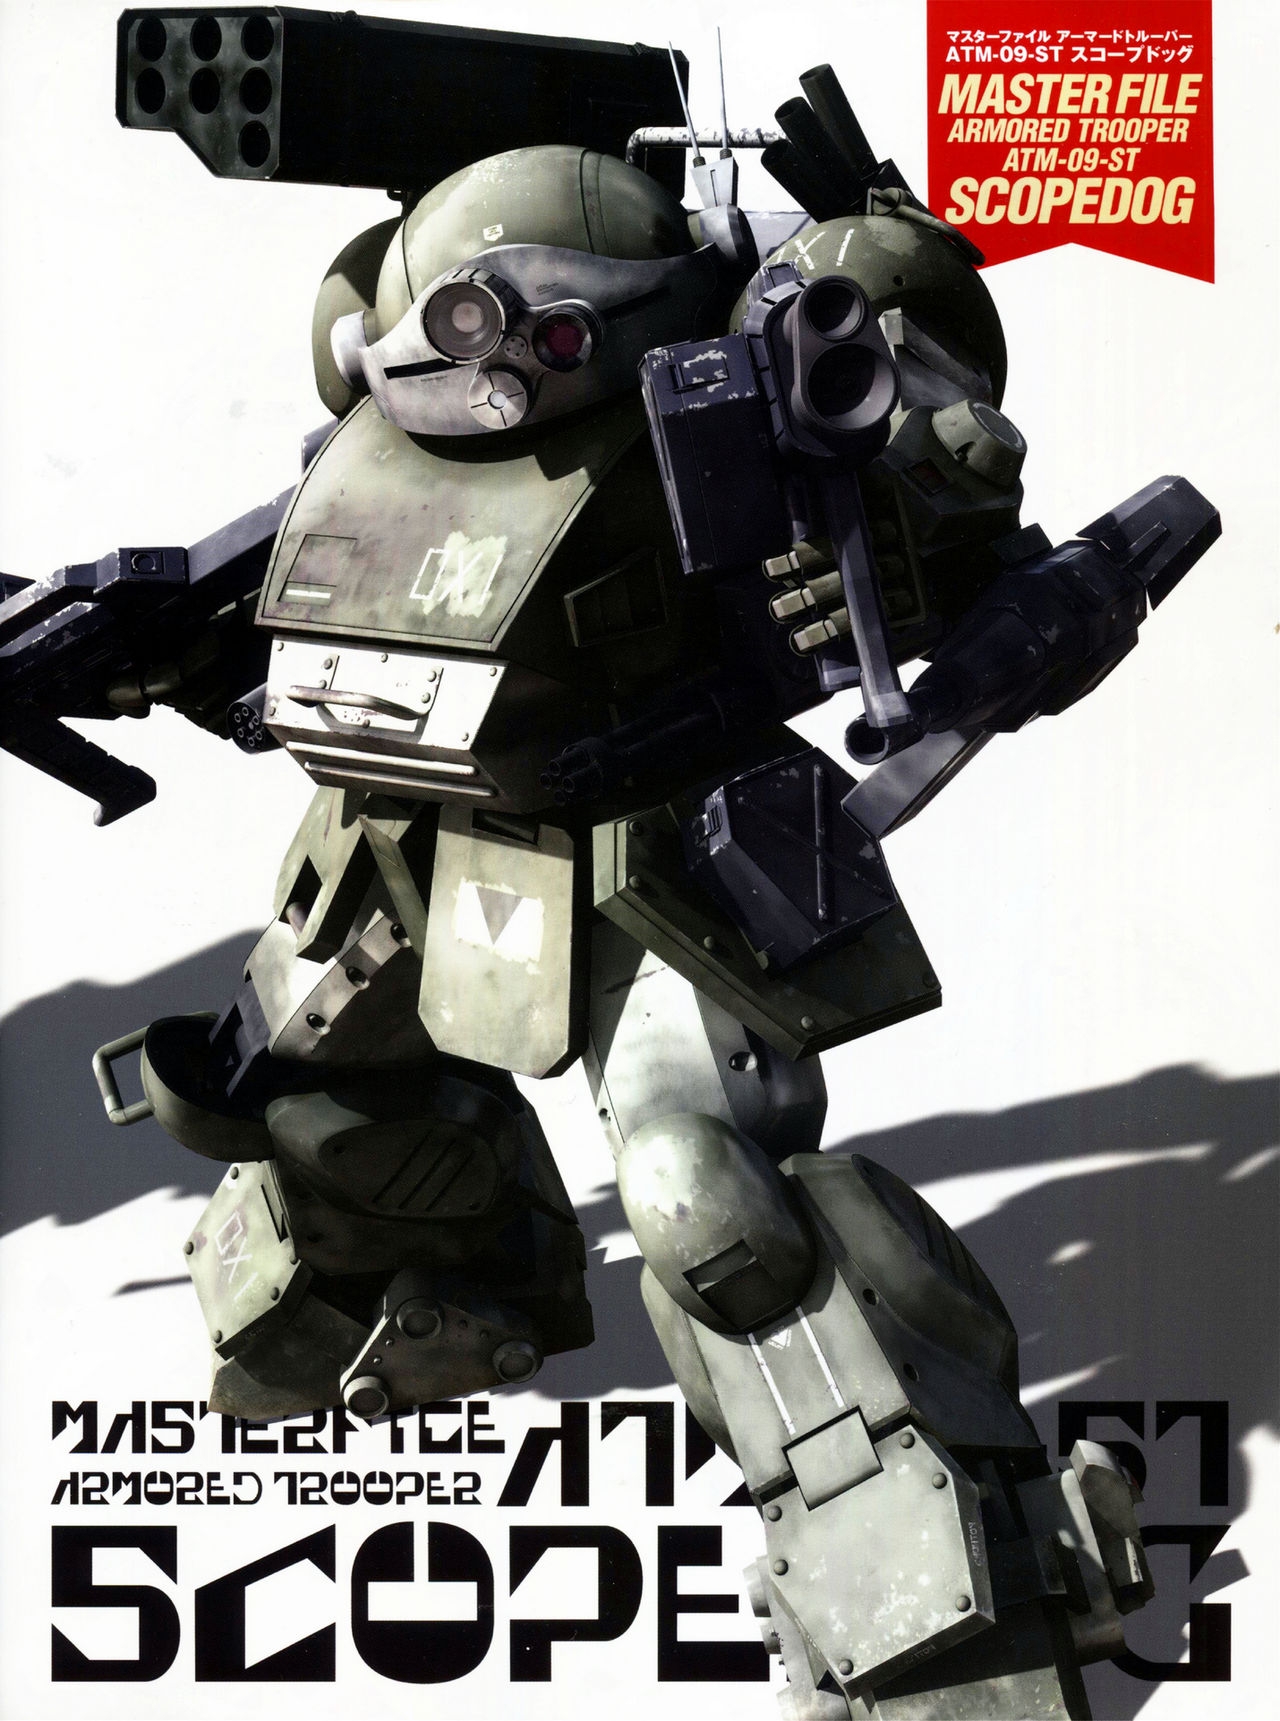 Master File - Armored Trooper AMT-09-ST Scopedog 0